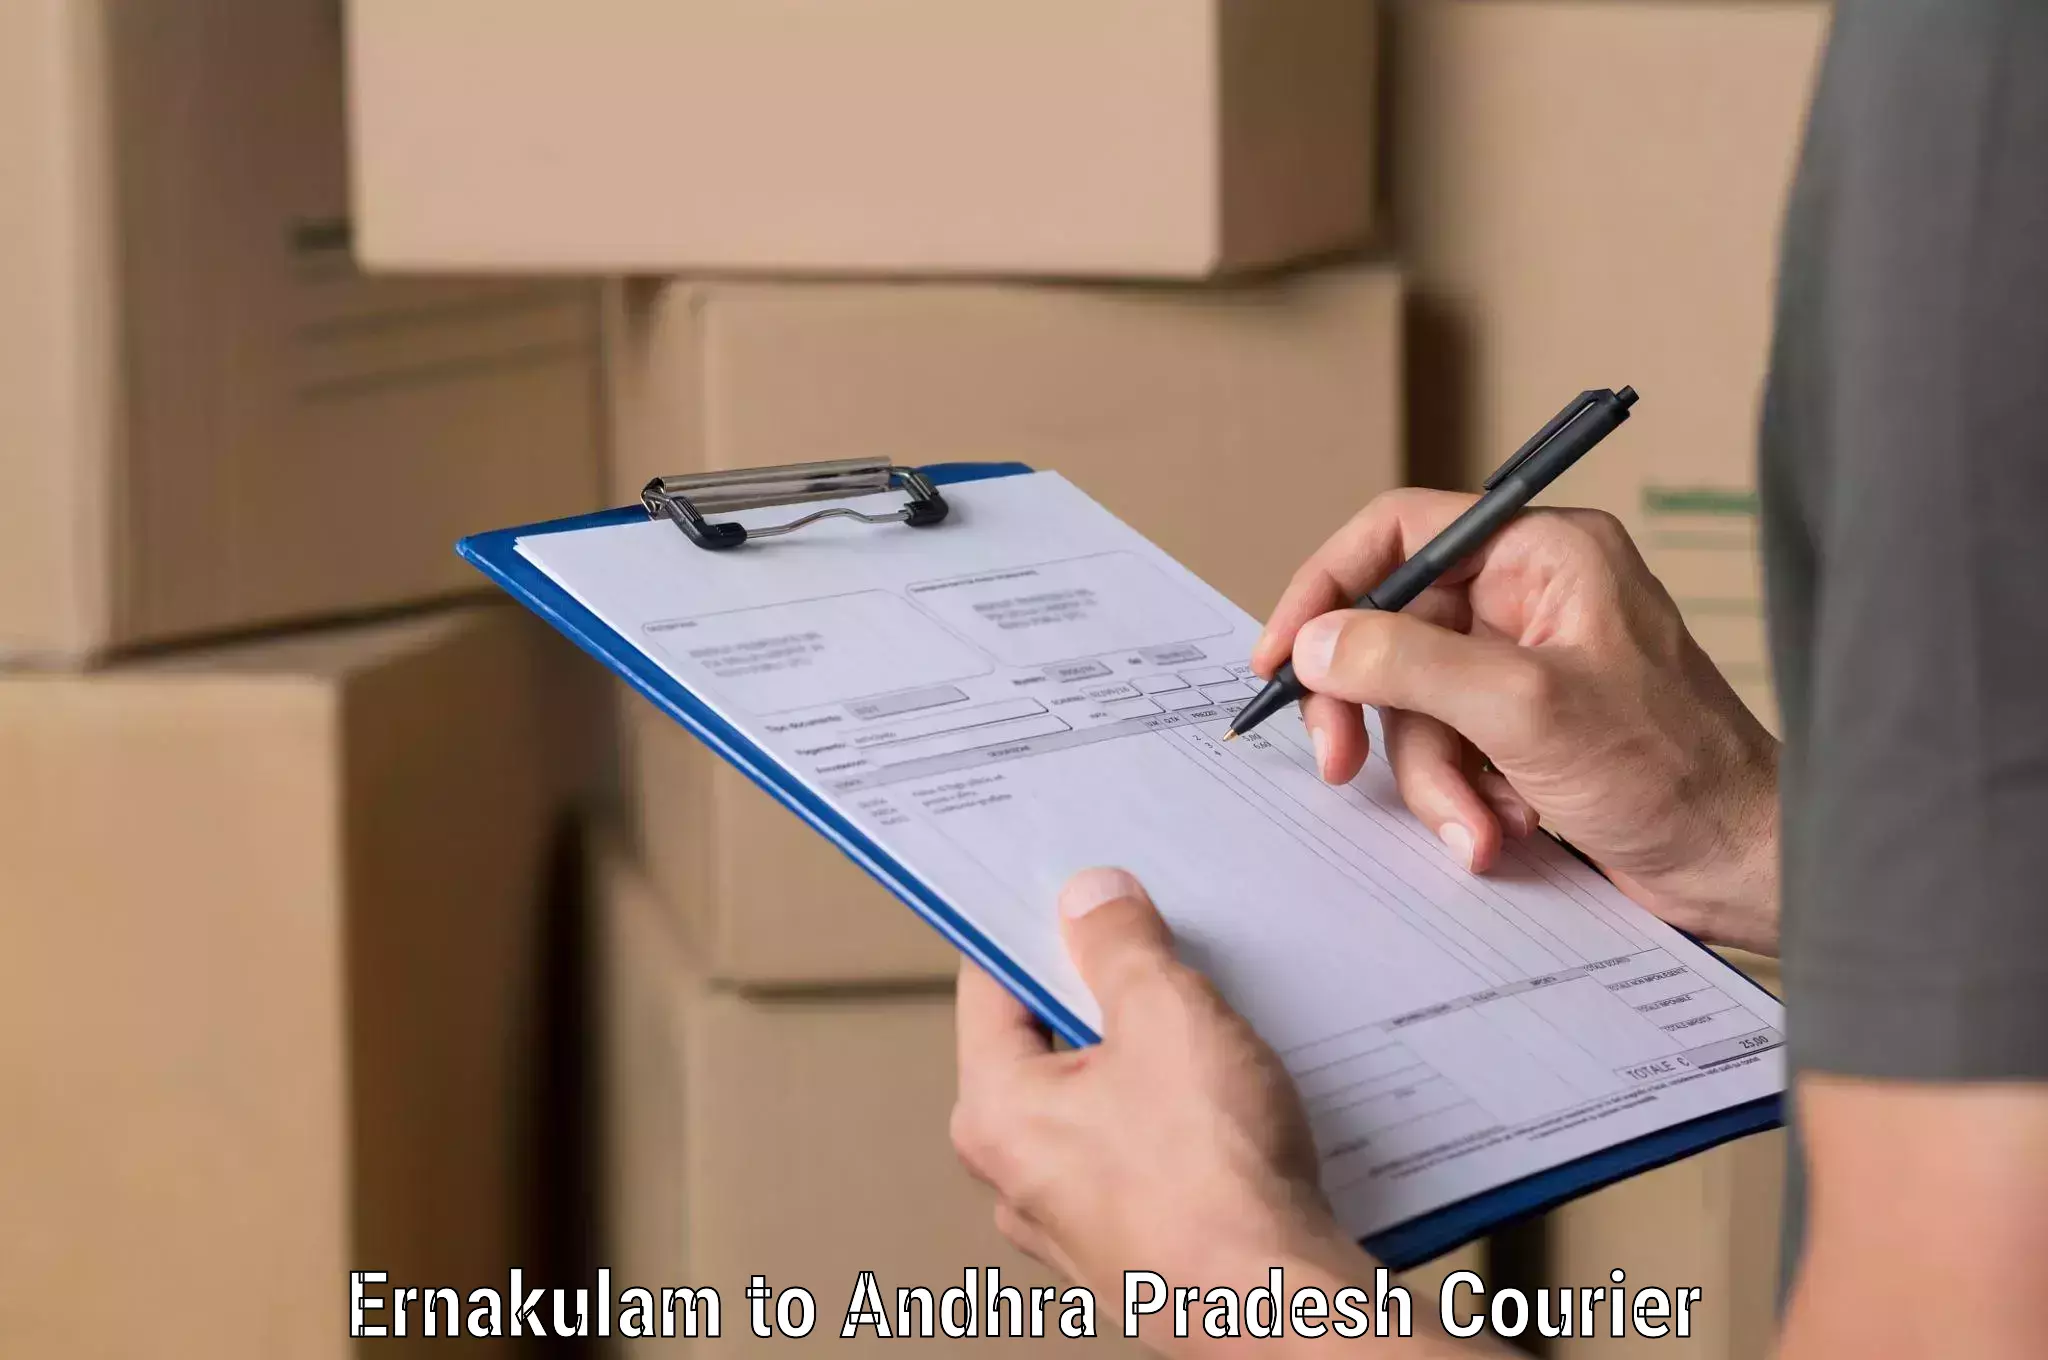 Global logistics network Ernakulam to Kavali